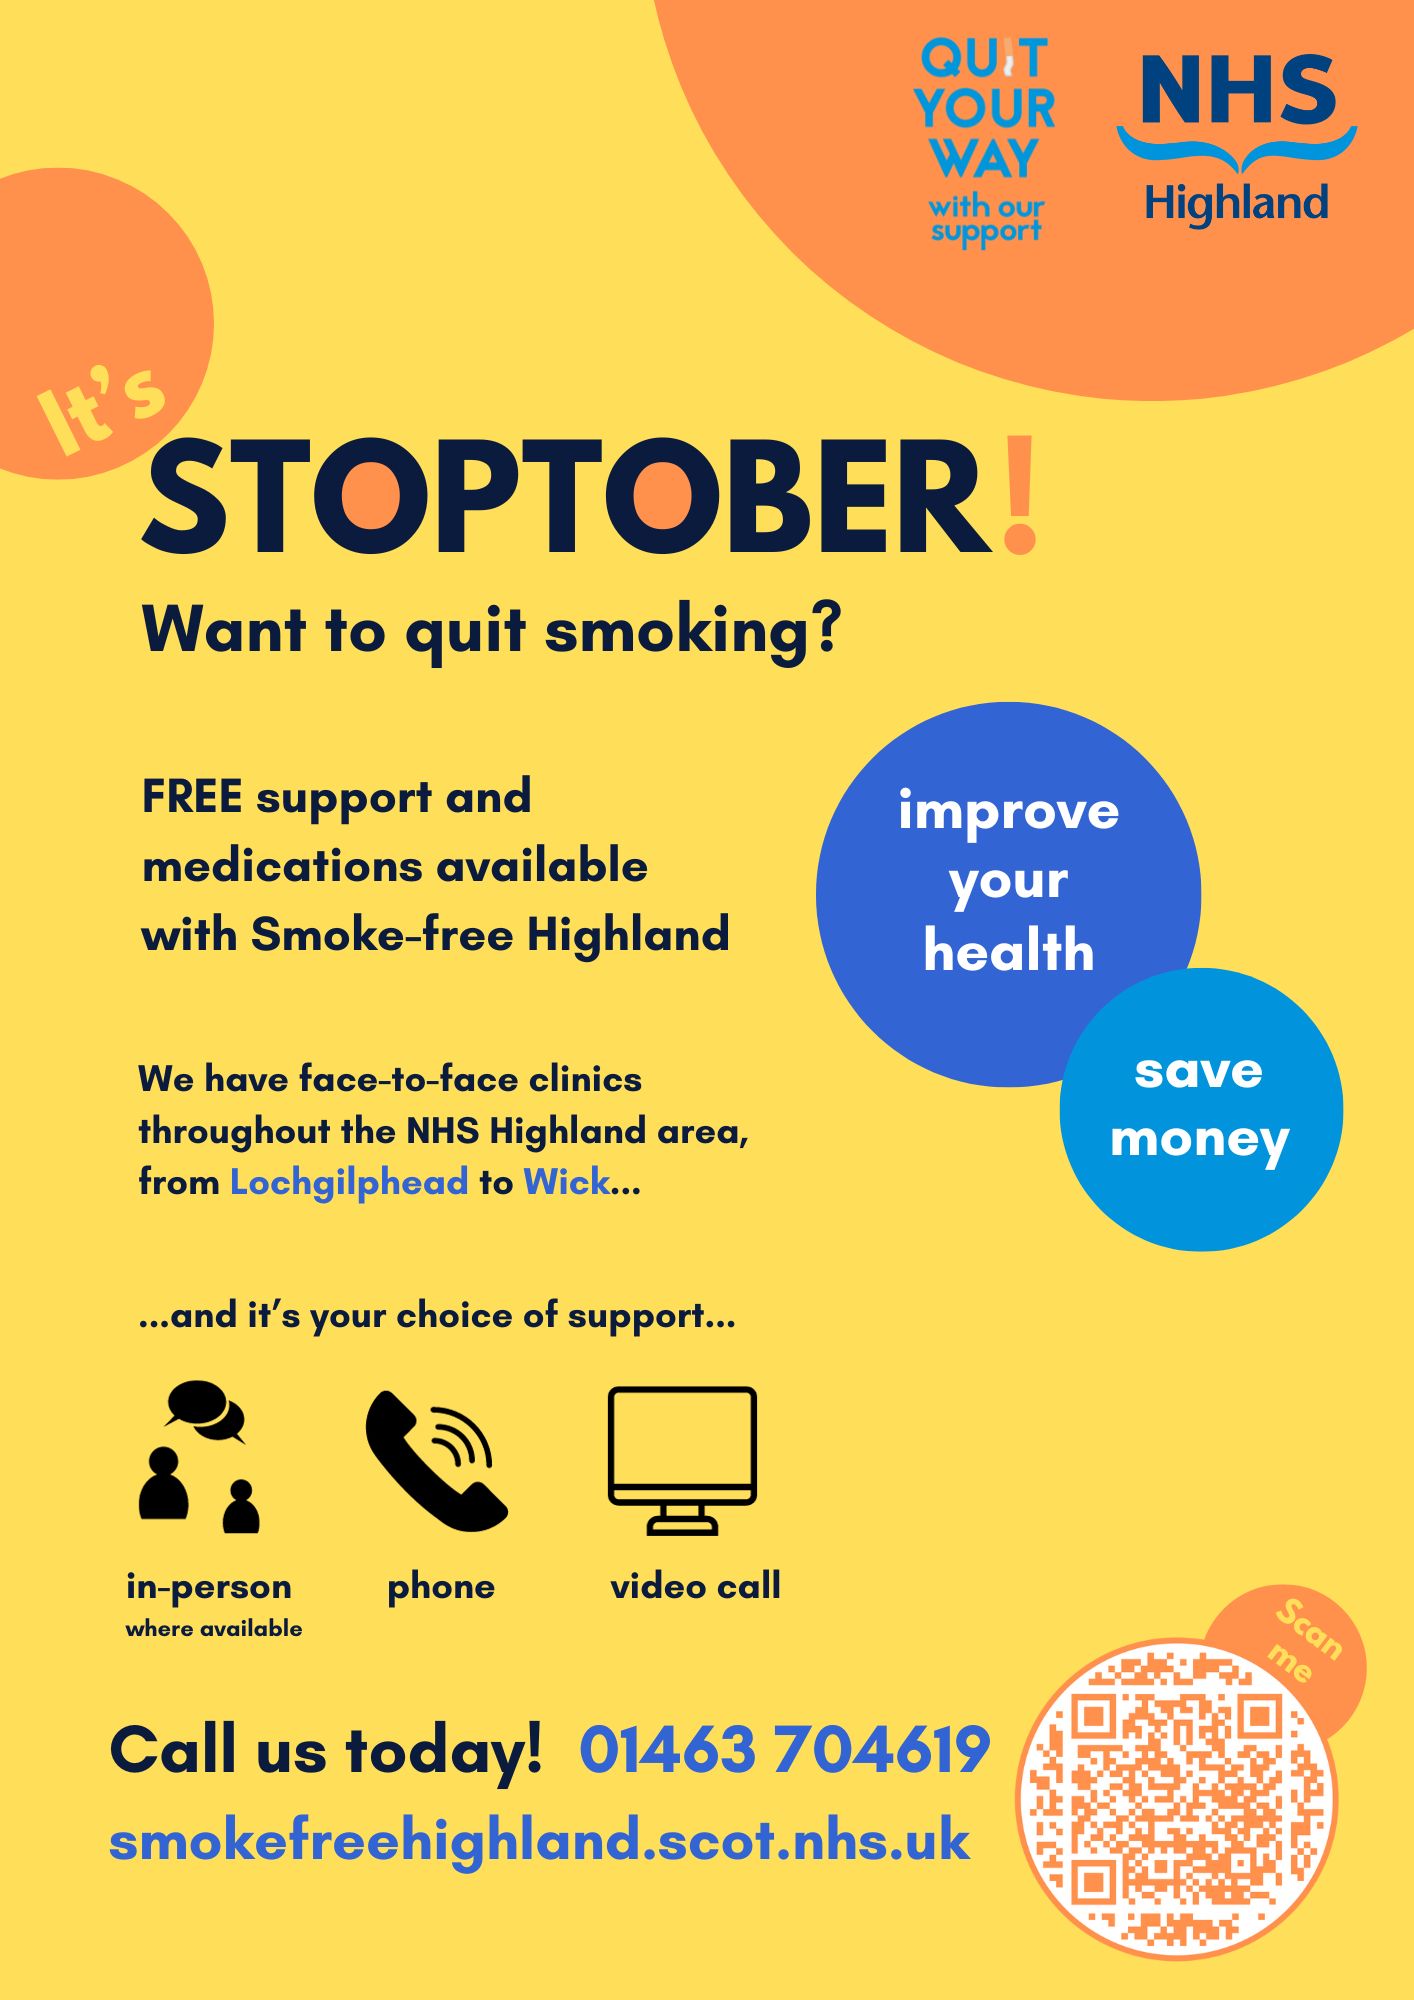 New stop smoking clinics across Highland for Stoptober